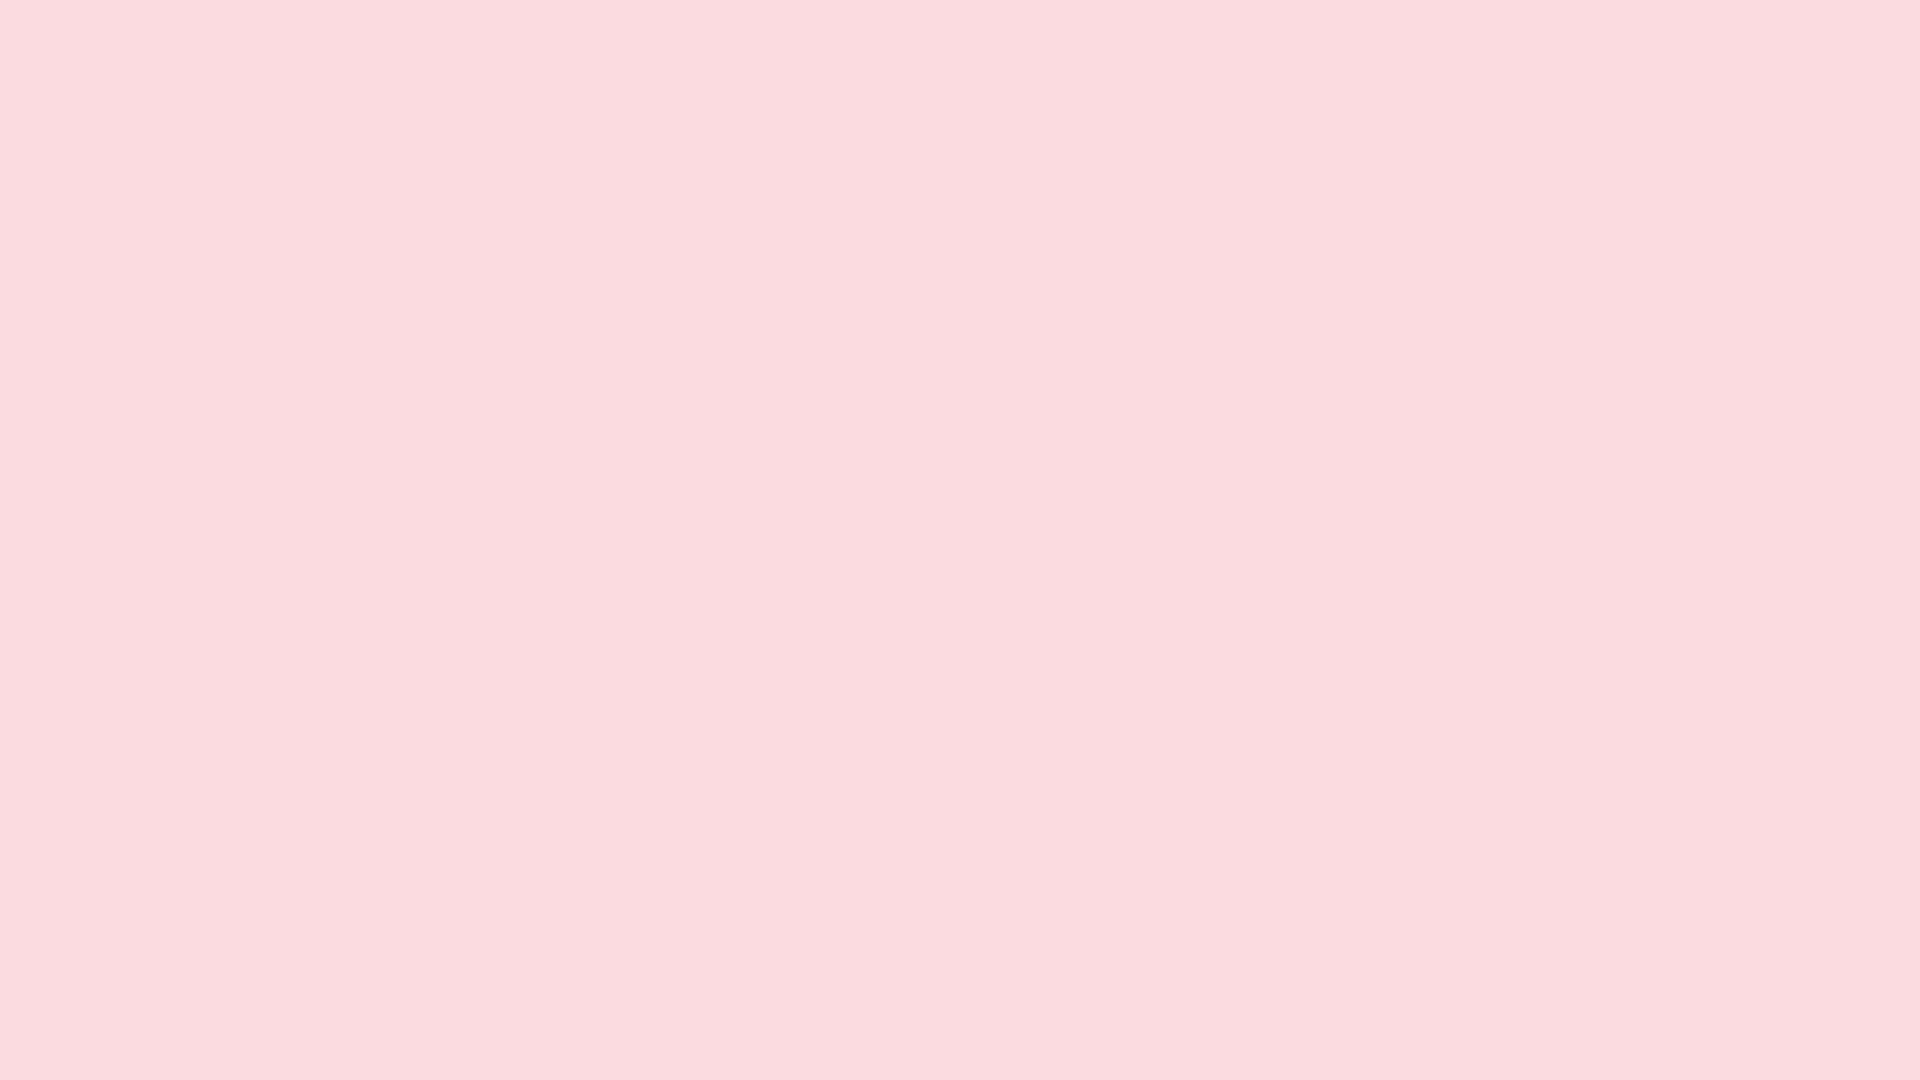 A Minimalistic Plain Pink Desktop Wallpaper